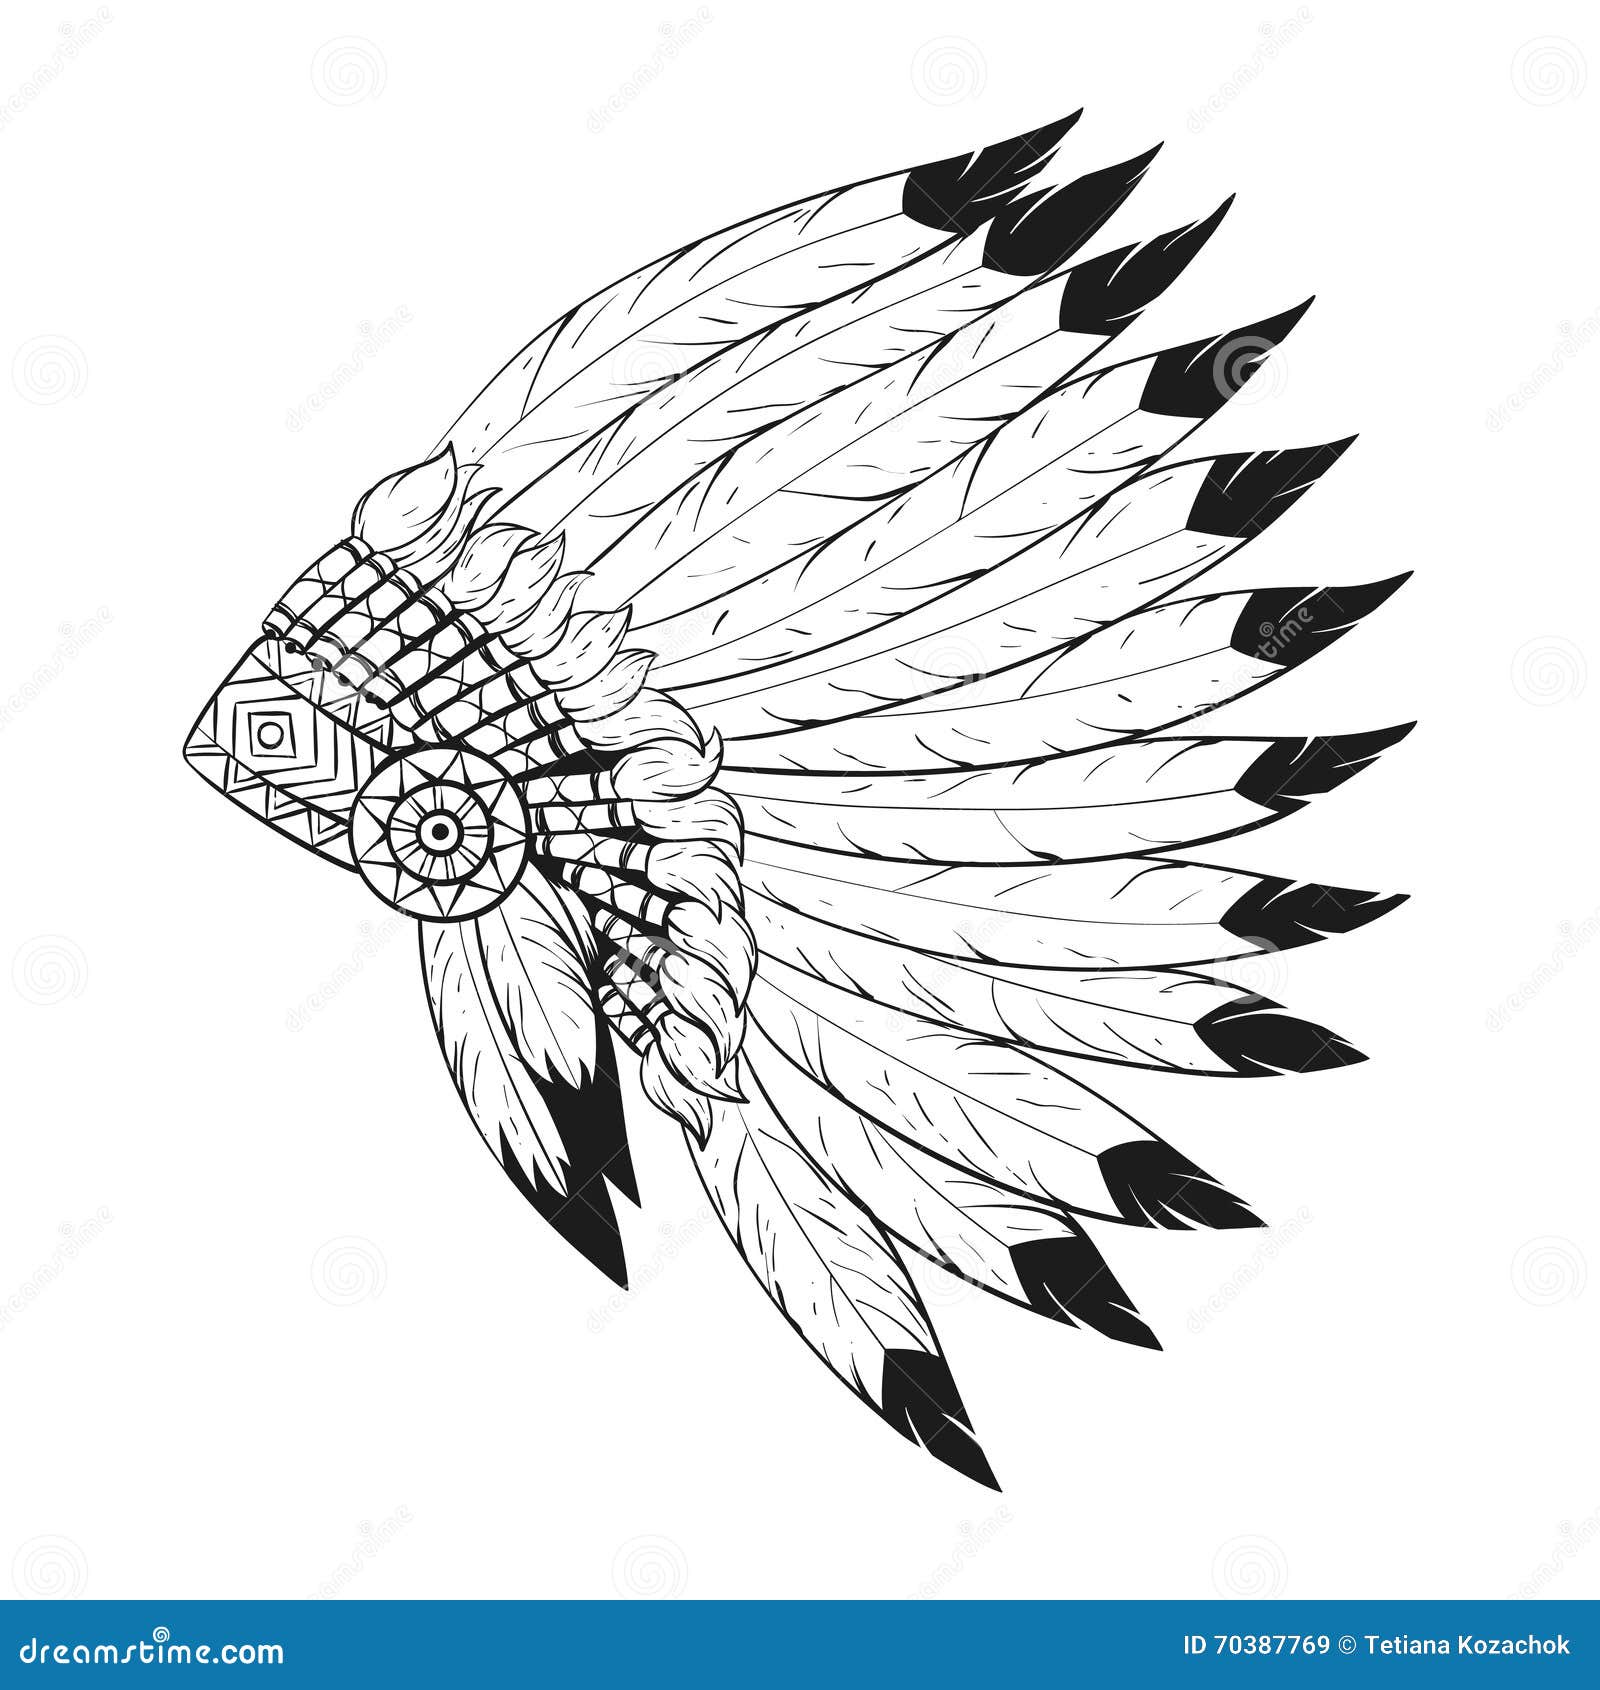  monochrome  of native american war bonnet.